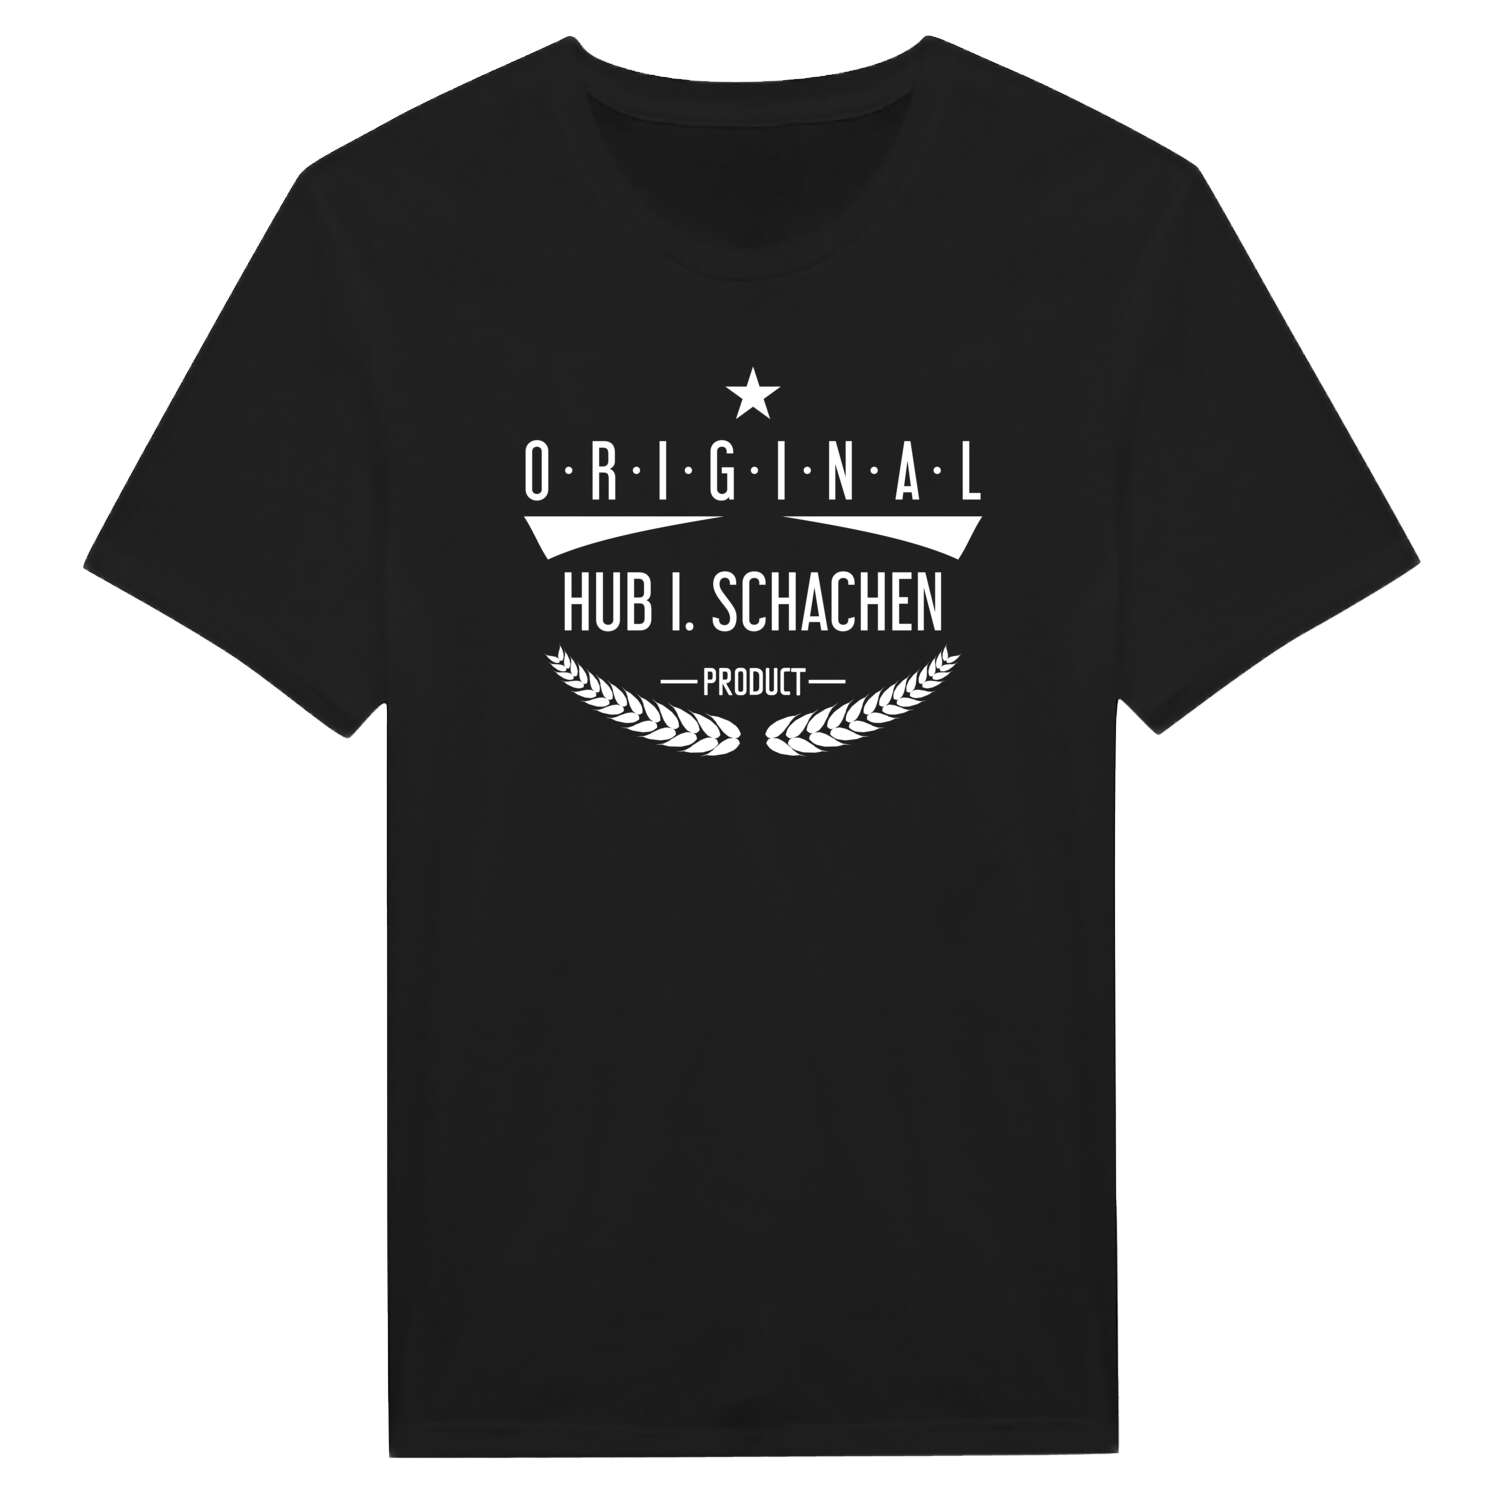 Hub i. Schachen T-Shirt »Original Product«